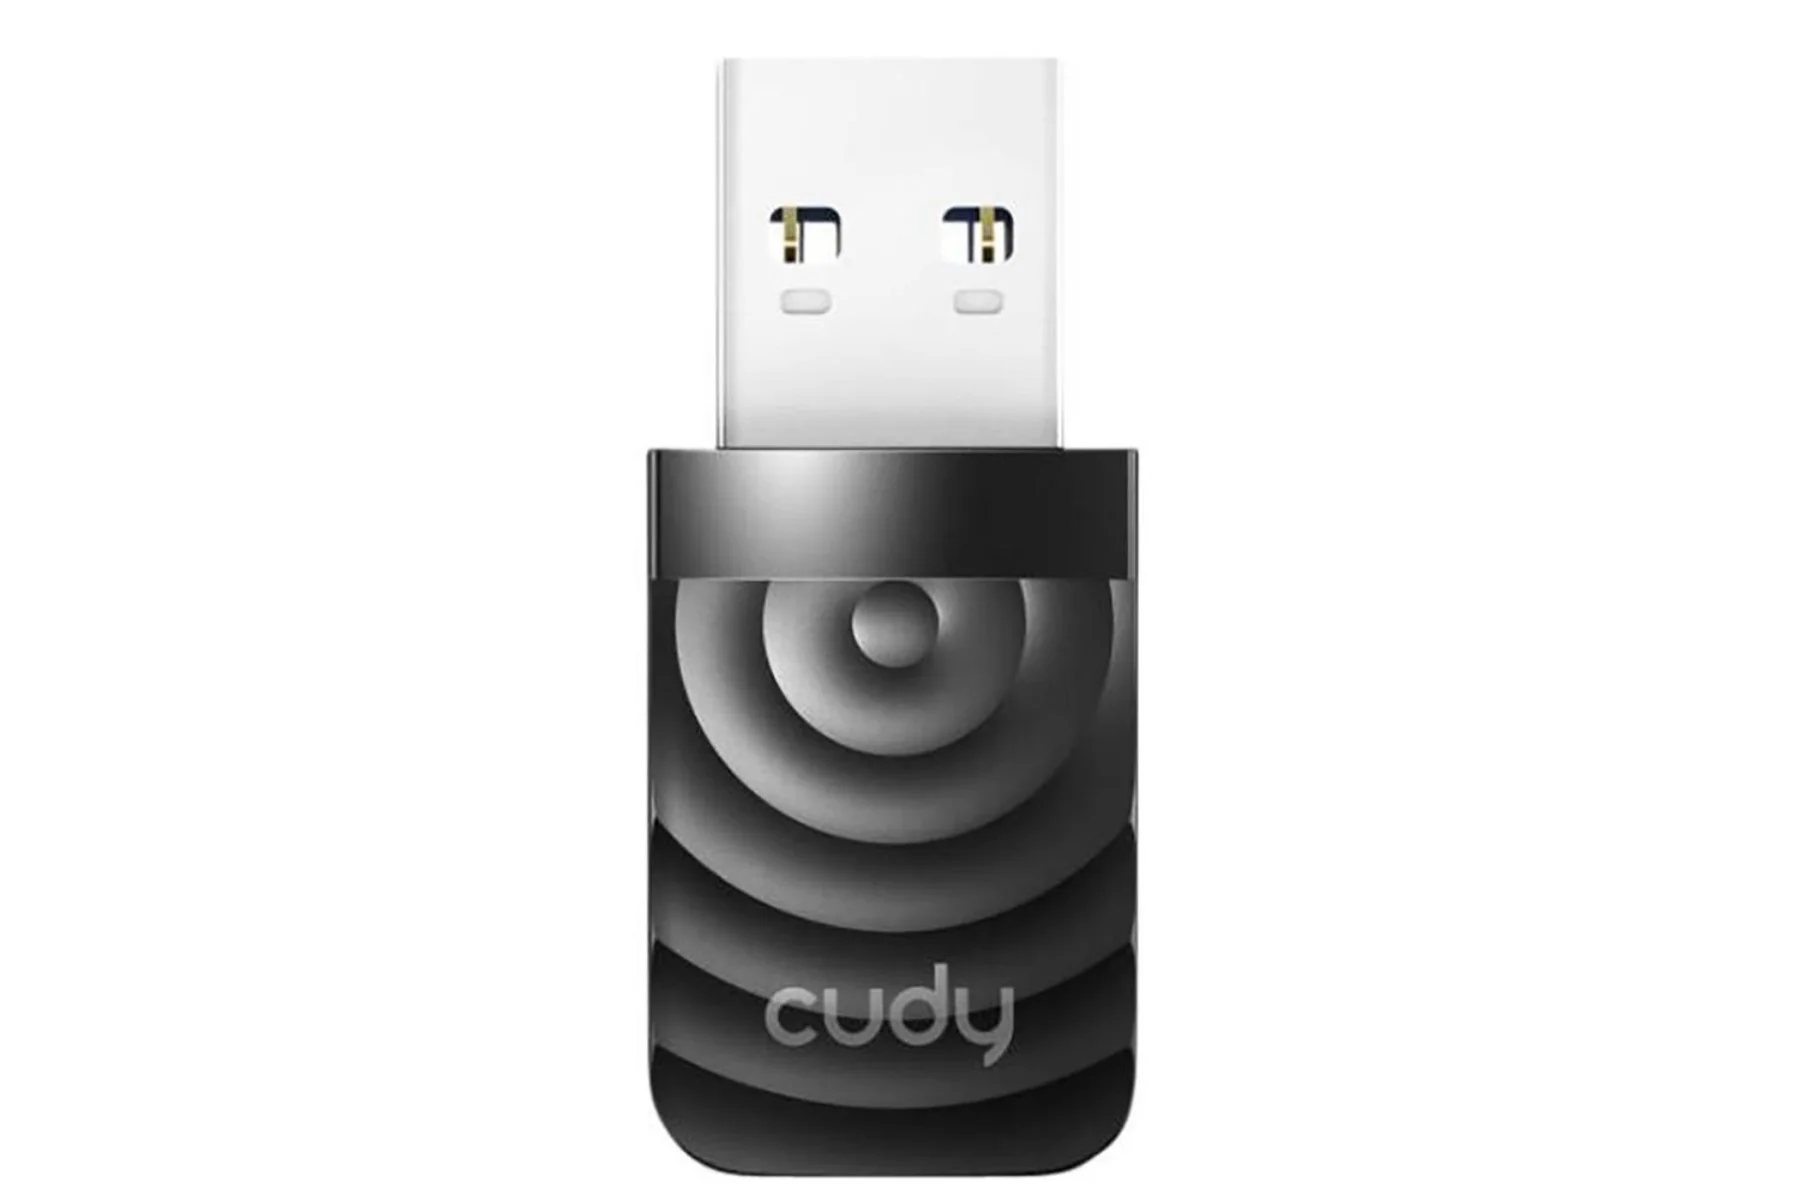 USB adaptér Cudy AC1300 Wi-Fi High Gain USB 3.0 bezpecnost